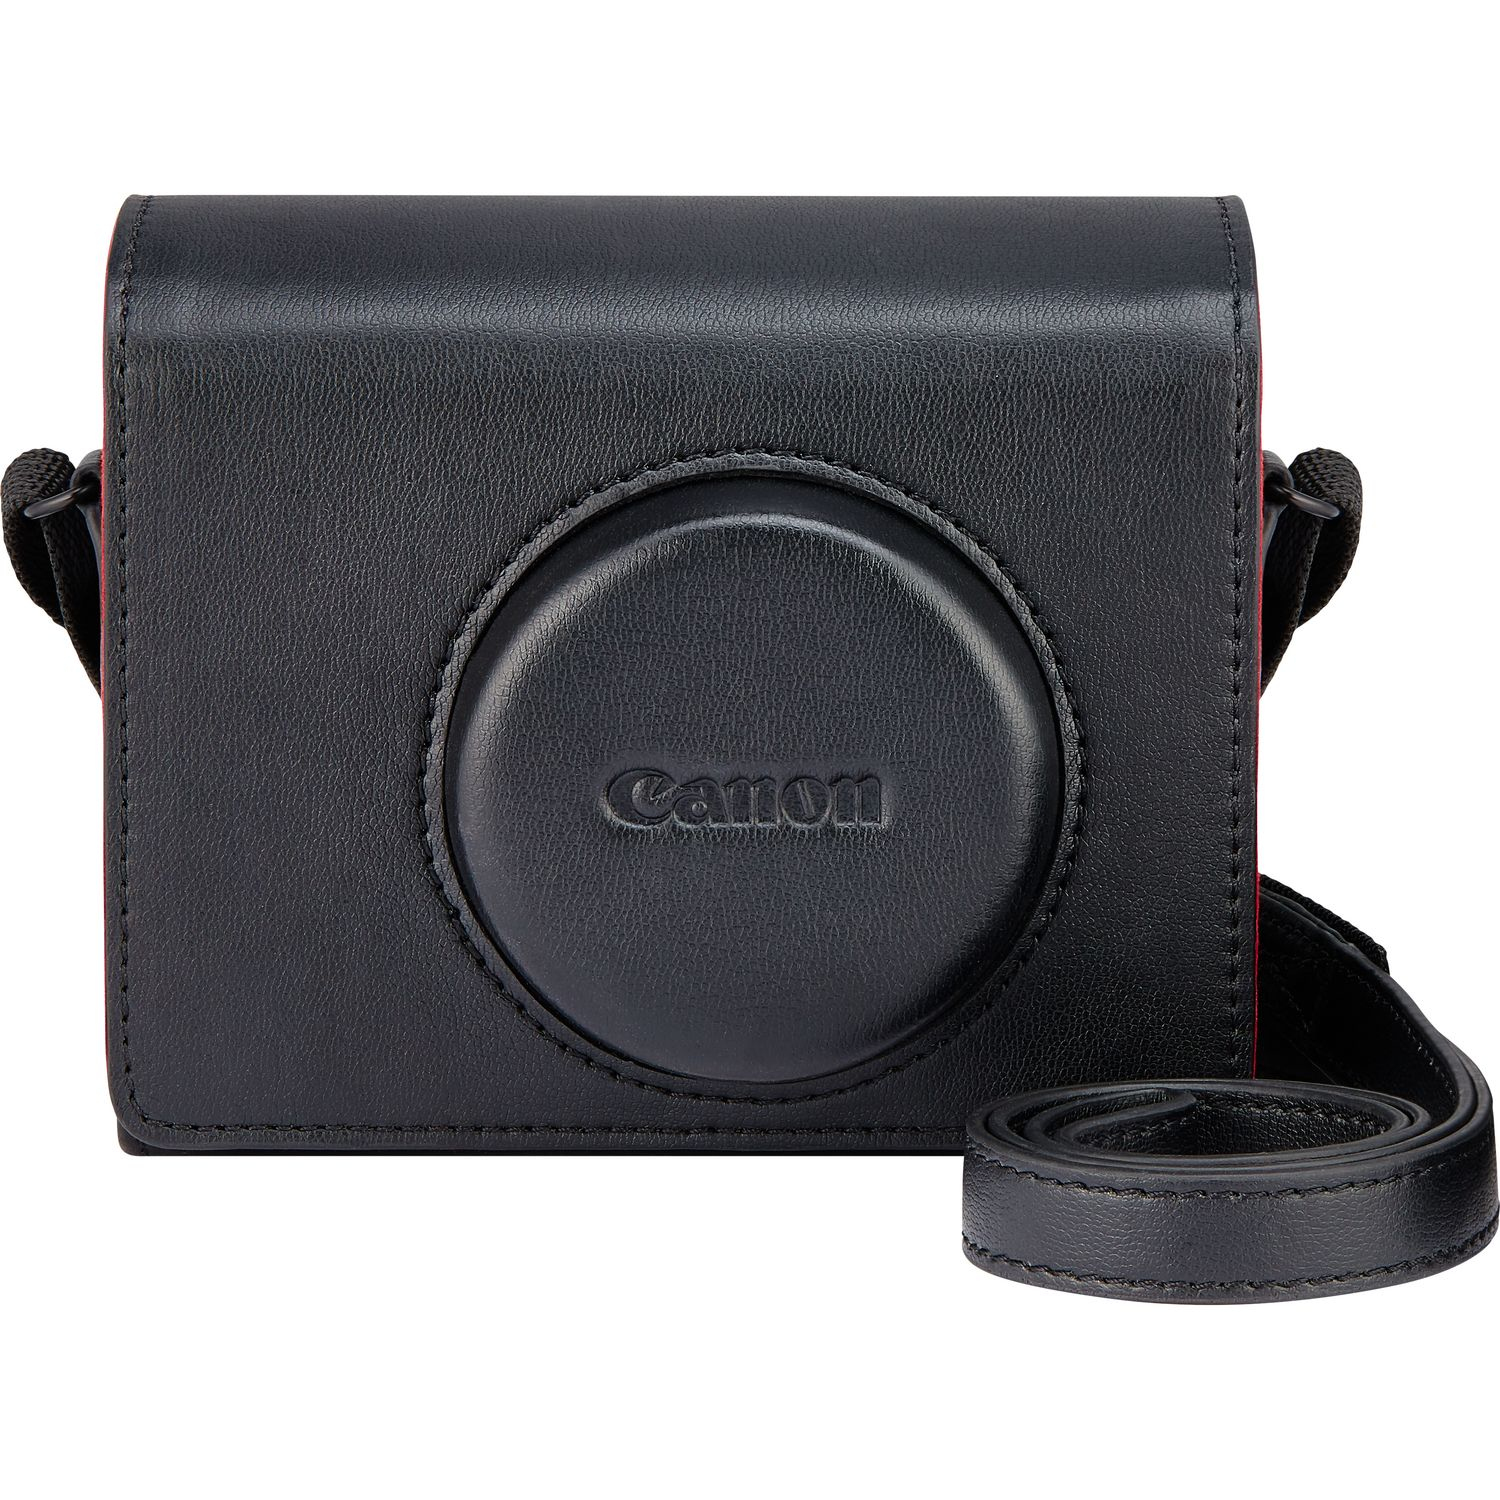 Canon DCC-1830